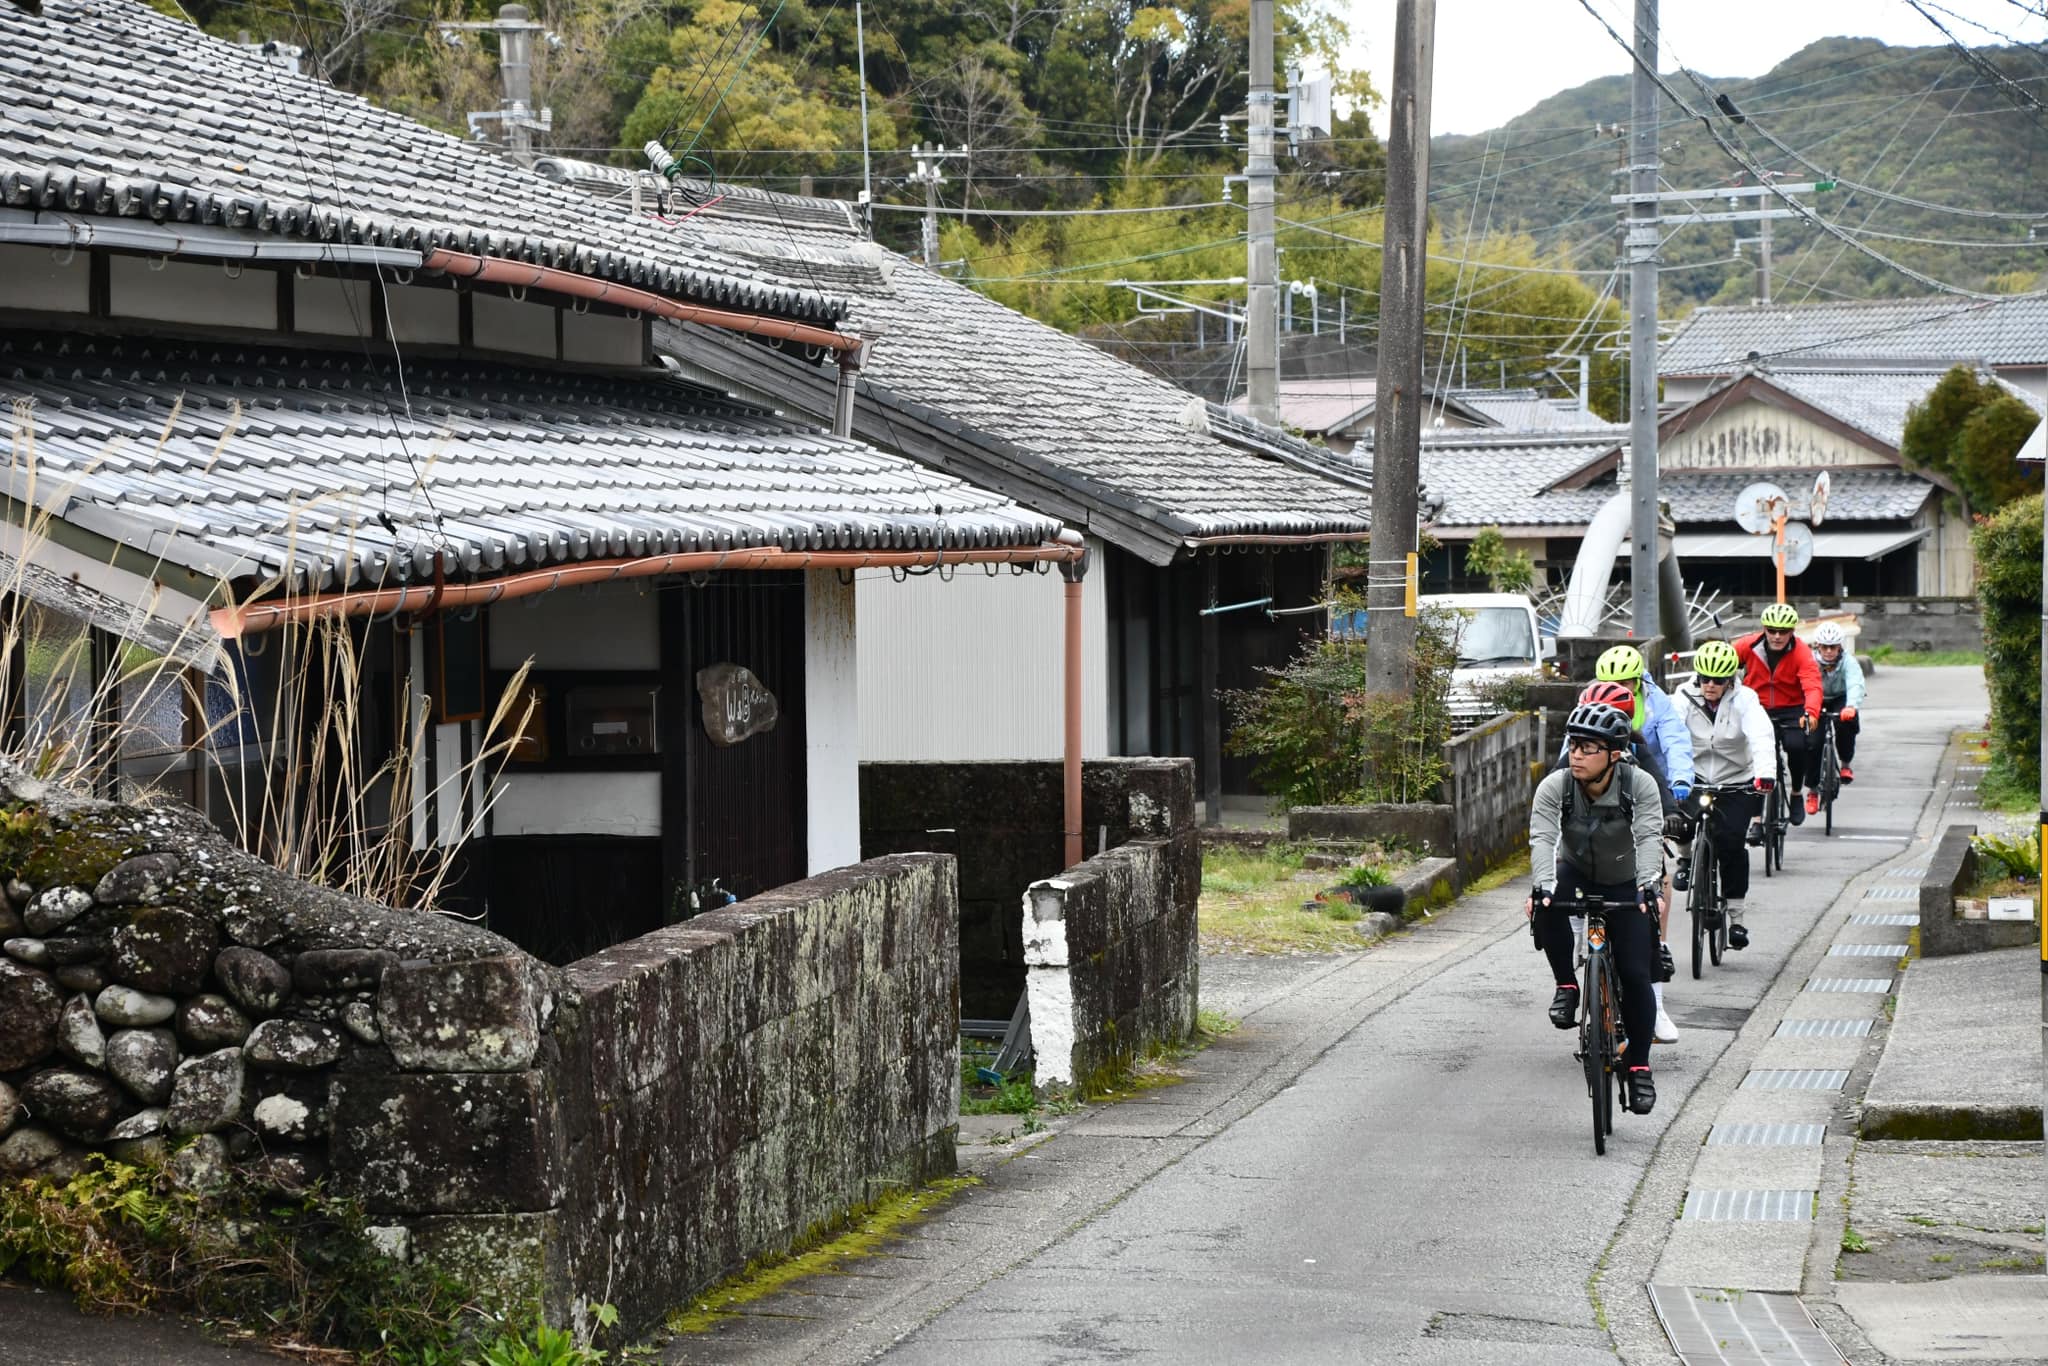 7days of Discovery: KUMANO-KODO Pilgrimage Bike & Hike Tour has finished